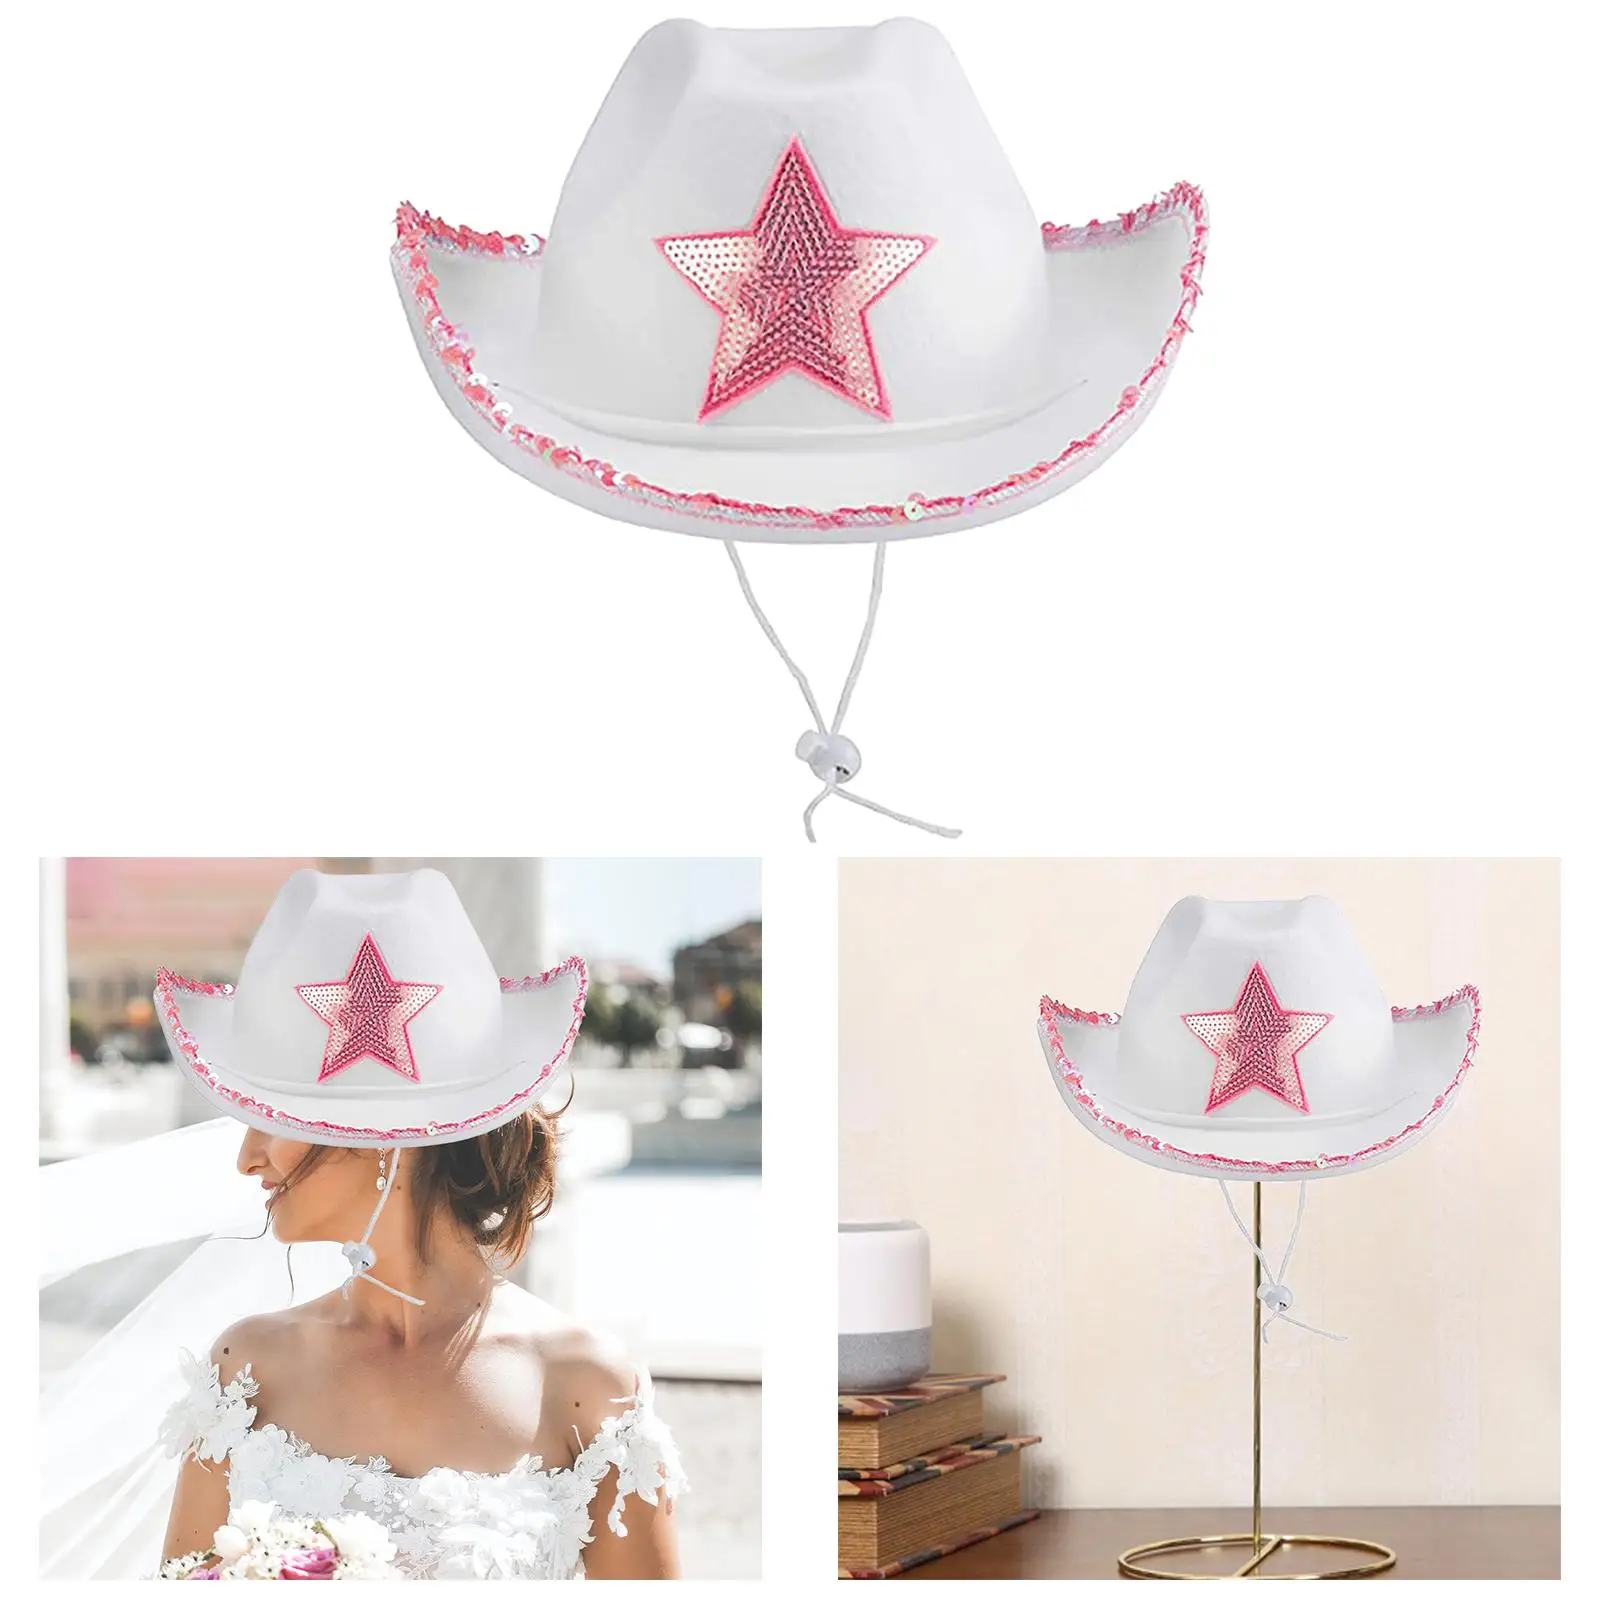 Wild West Cowboy Hat with Tiara White Felt Adjustable Neck Draw String Wide Brim Novelty  Hat  Dress up Parties Costume Beach